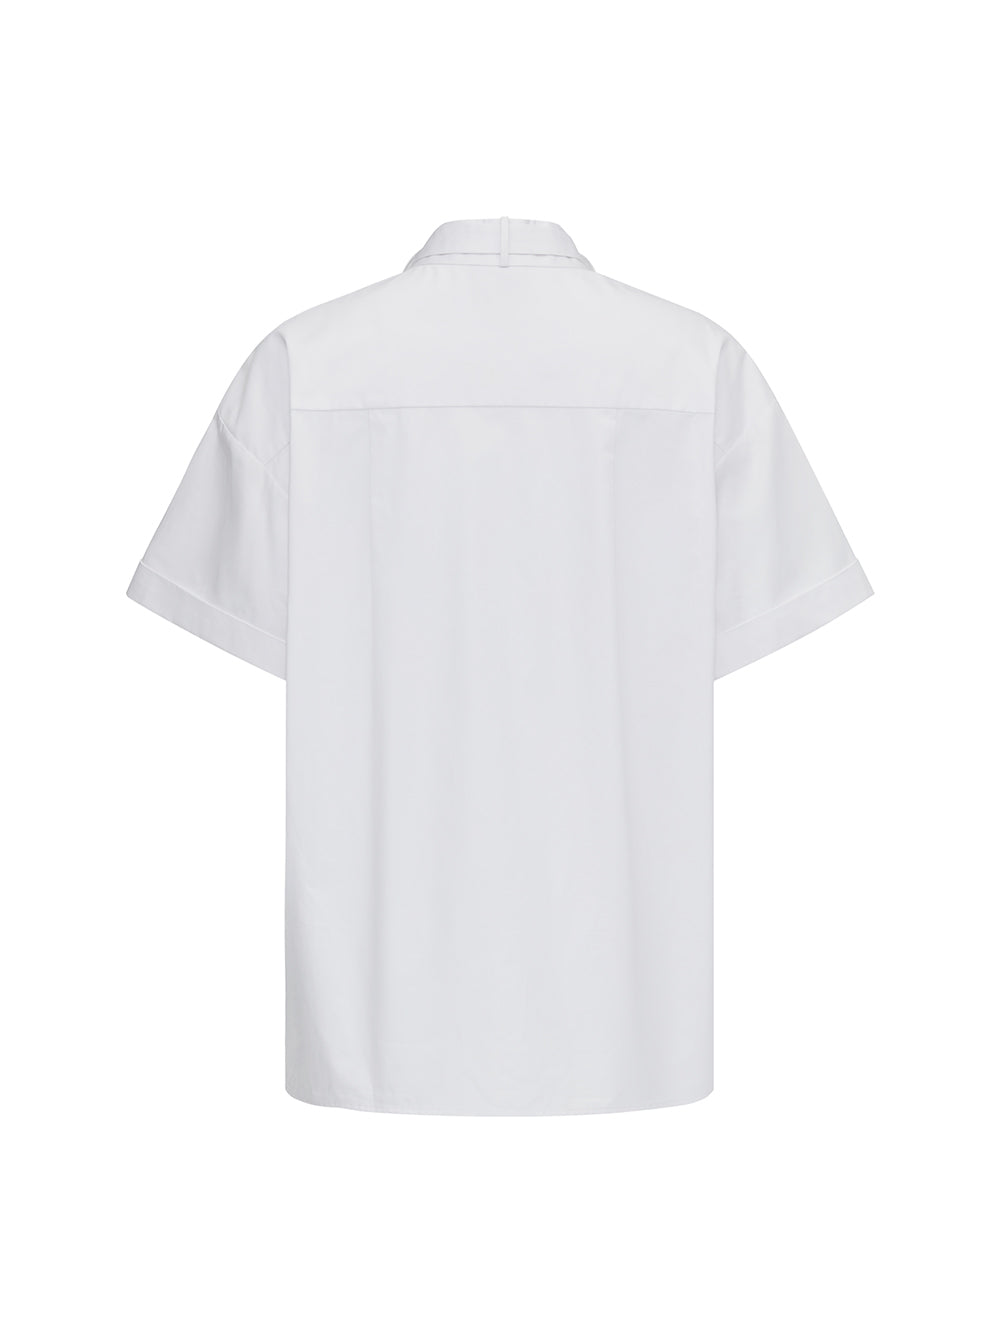 MUKZIN White Varsity Collar Shirt